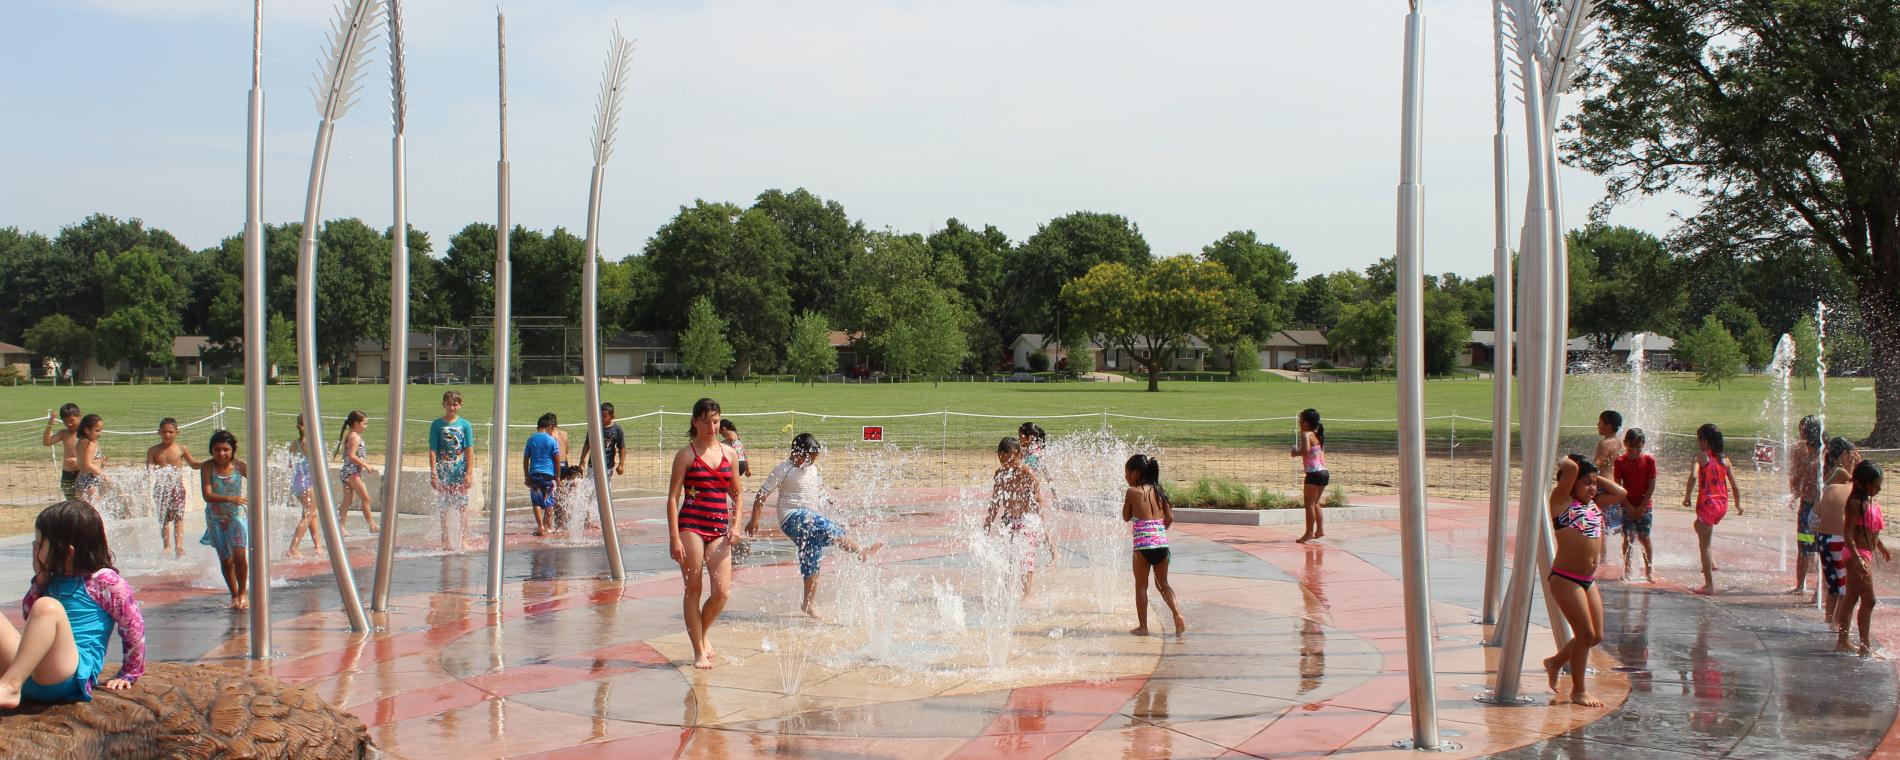 Buffalo Park Splash Pad with Kids